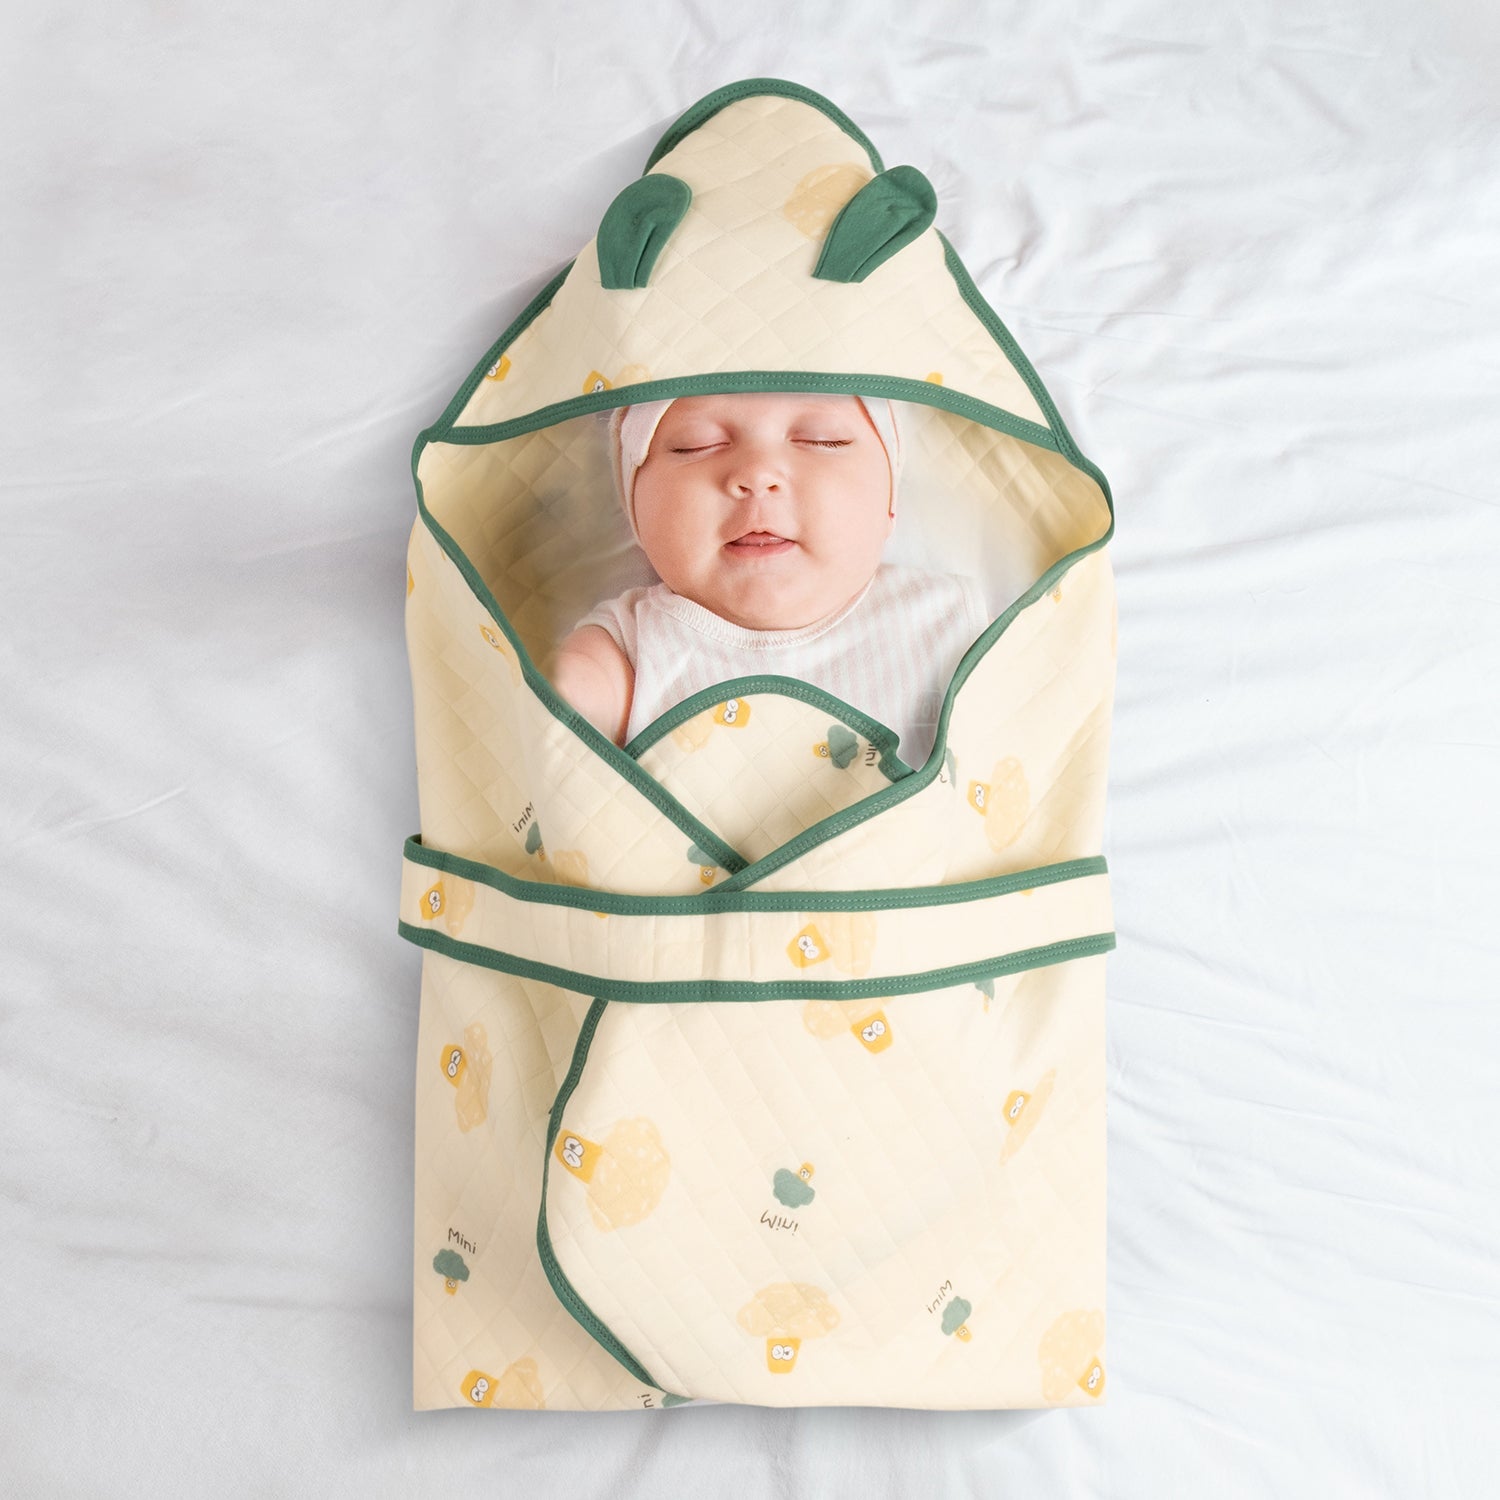 Baby Moo Spooky Eyes Soft Warm Hooded Wrapper - Green